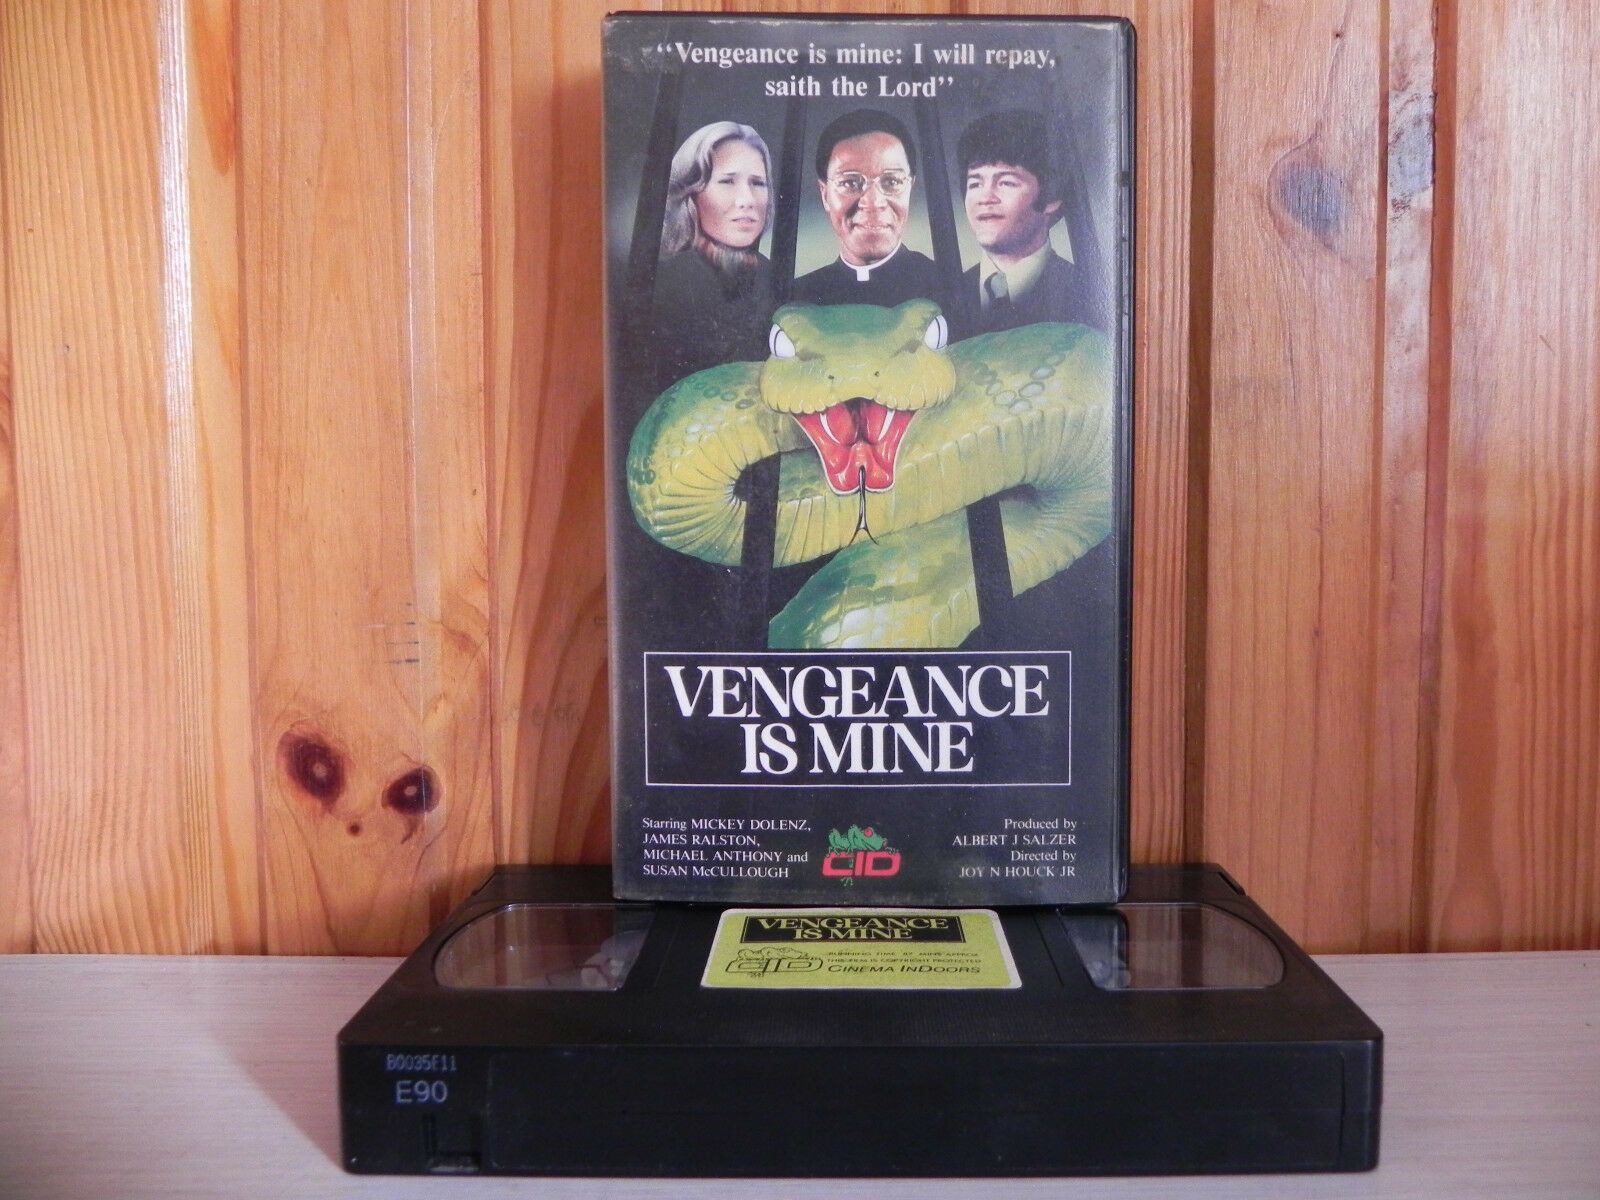 Vengeance Is Mine - CID - Thriller - Mickey Dolenz - Pre-Cert - Pal VHS-